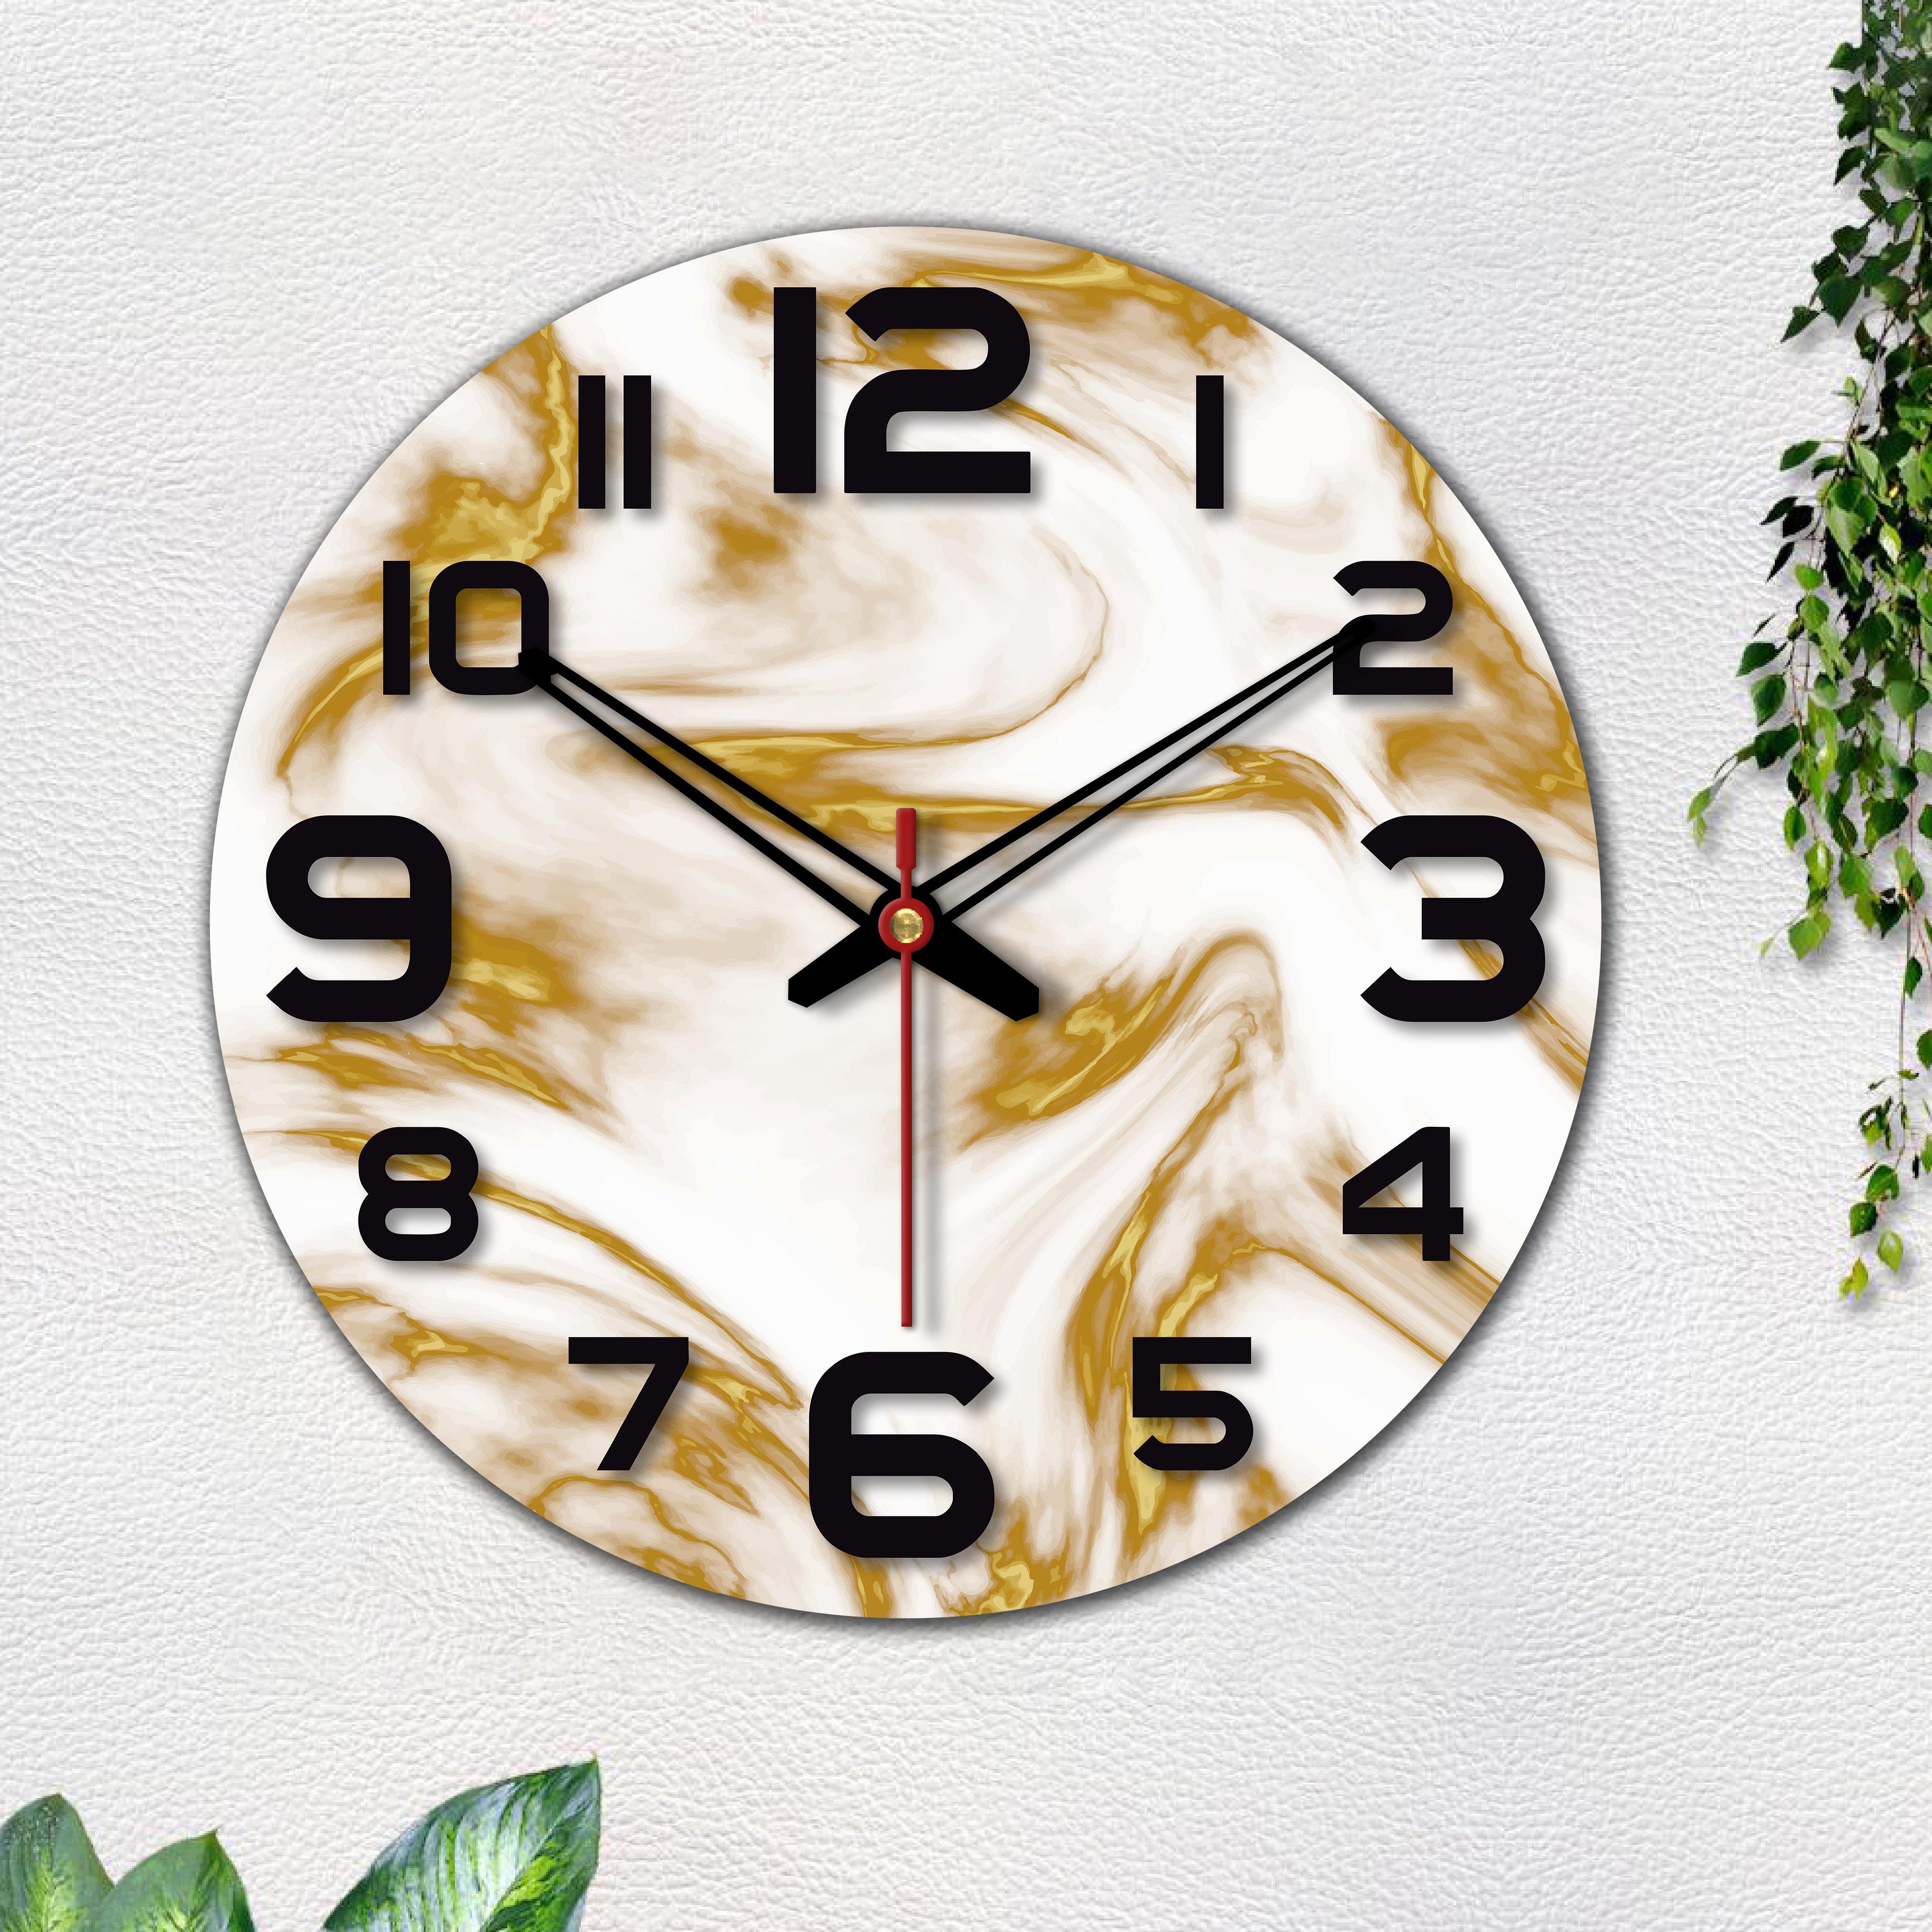 Texture Design Printed Wooden Wall Clock